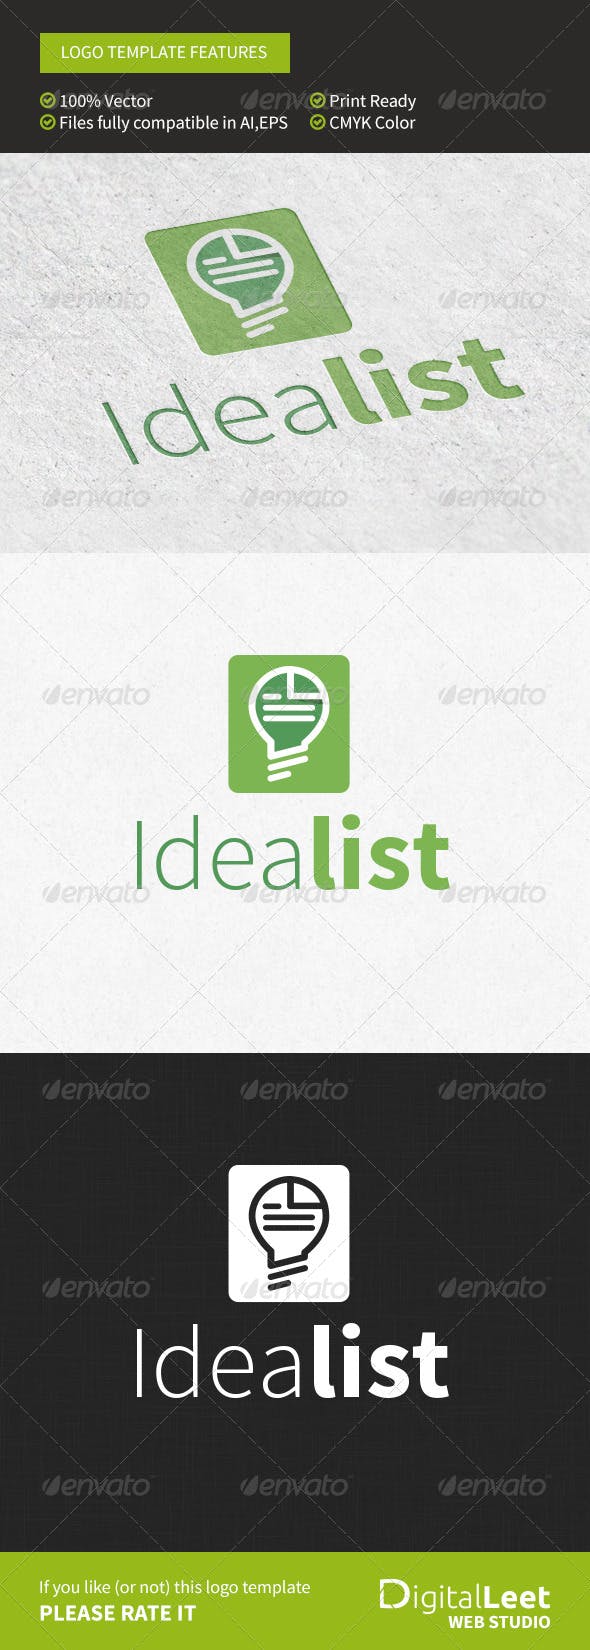 Idealist Logo - Idealist Logo Template by eaven | GraphicRiver